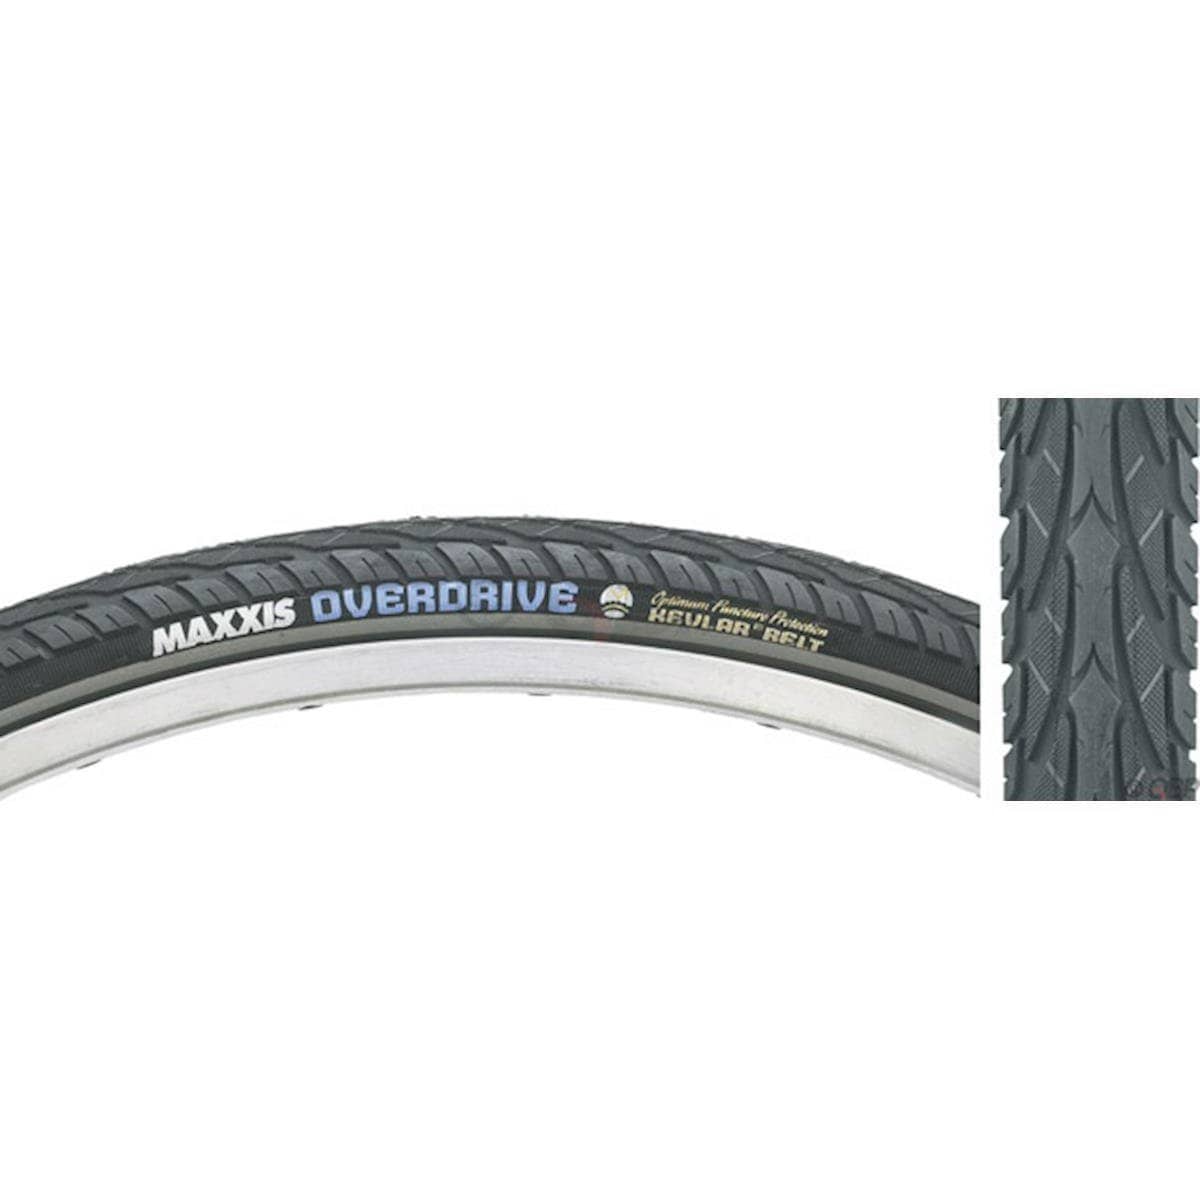 Maxxis Overdrive Bike Tire: 27.5 x 1.65", Wire, 60tpi, Single Compound, Silk Worm